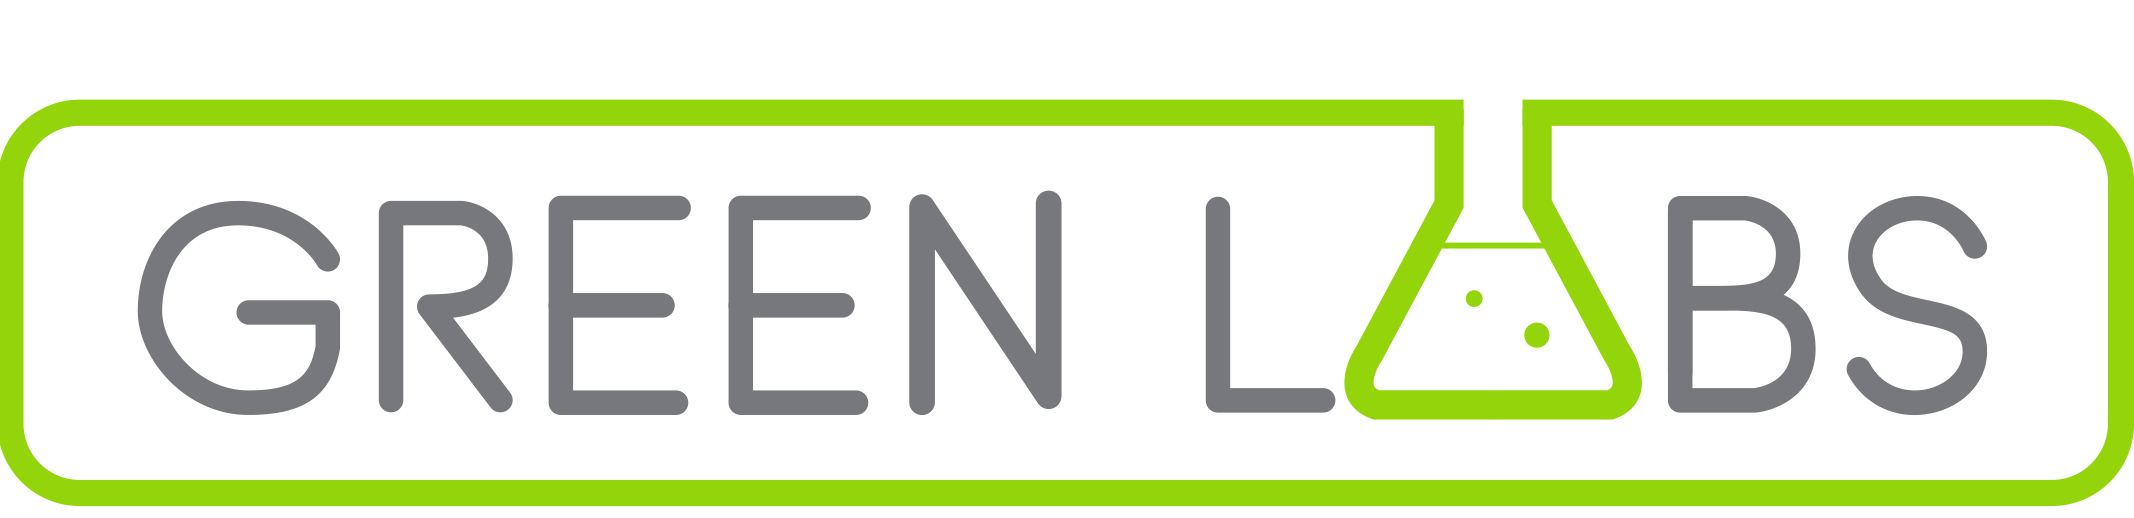 greenlabs_logo